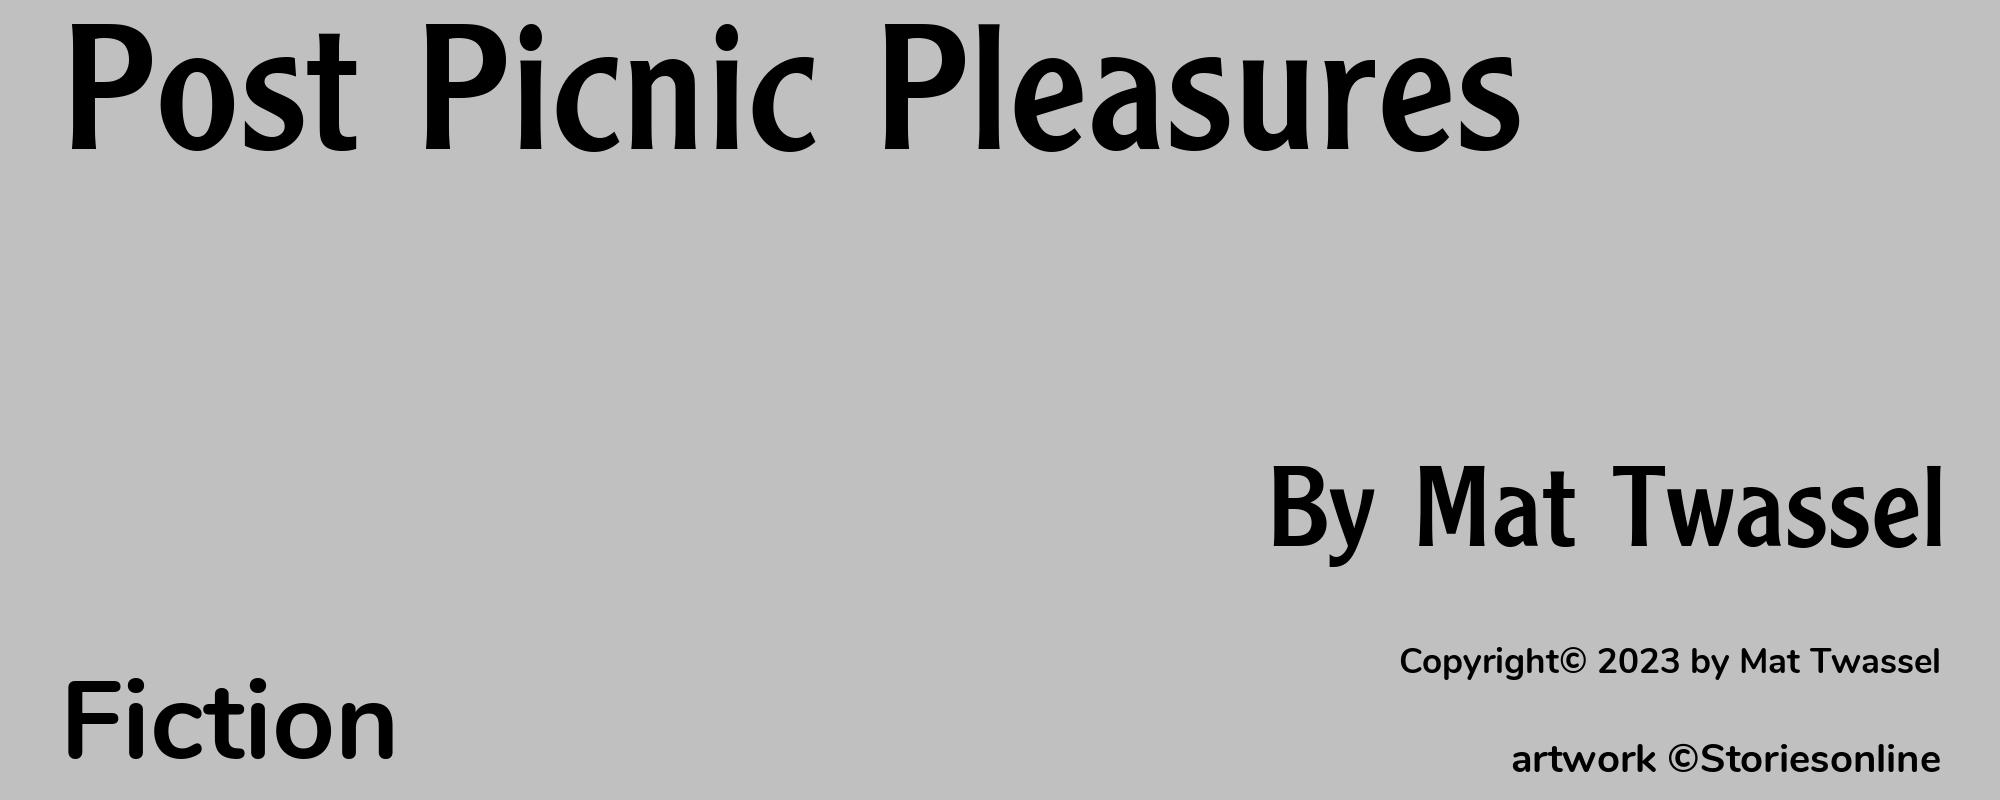 Post Picnic Pleasures - Cover